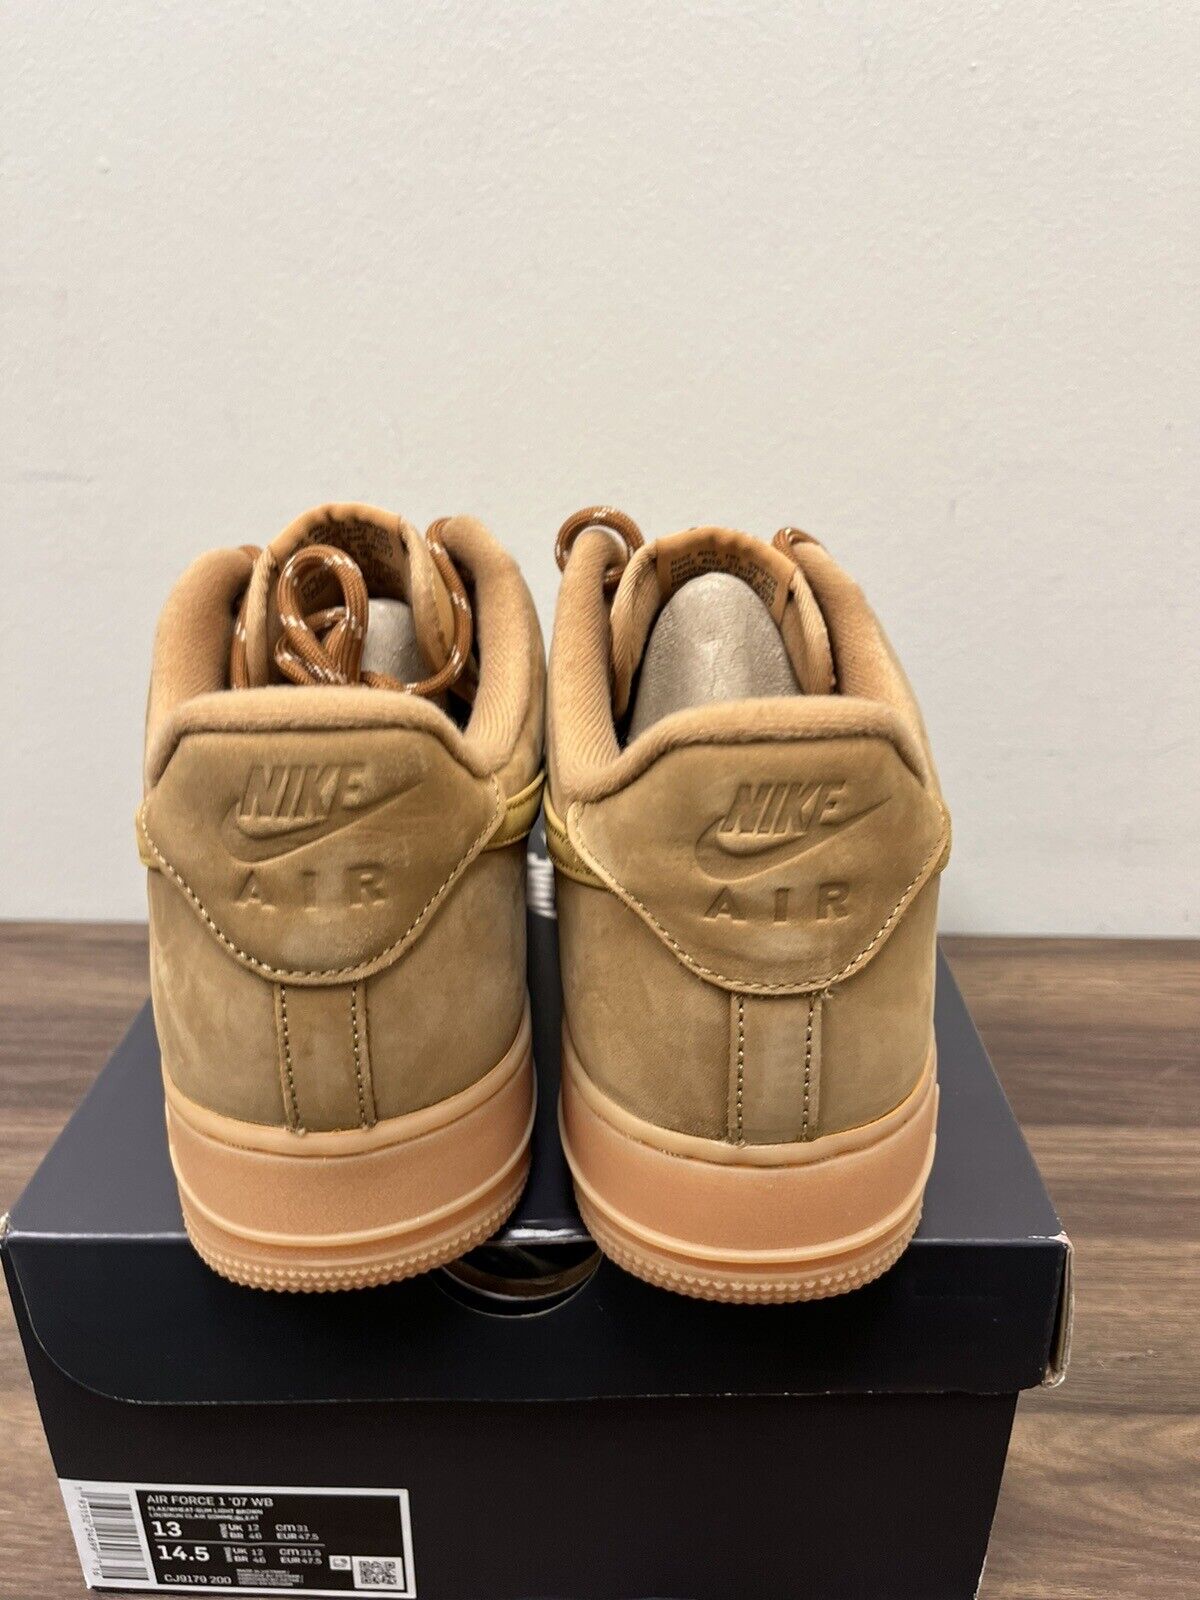 Nike Air Force 1 '07 WB Shoes Wheat Flax Gum Brown CJ9179-200 Men's Size 13